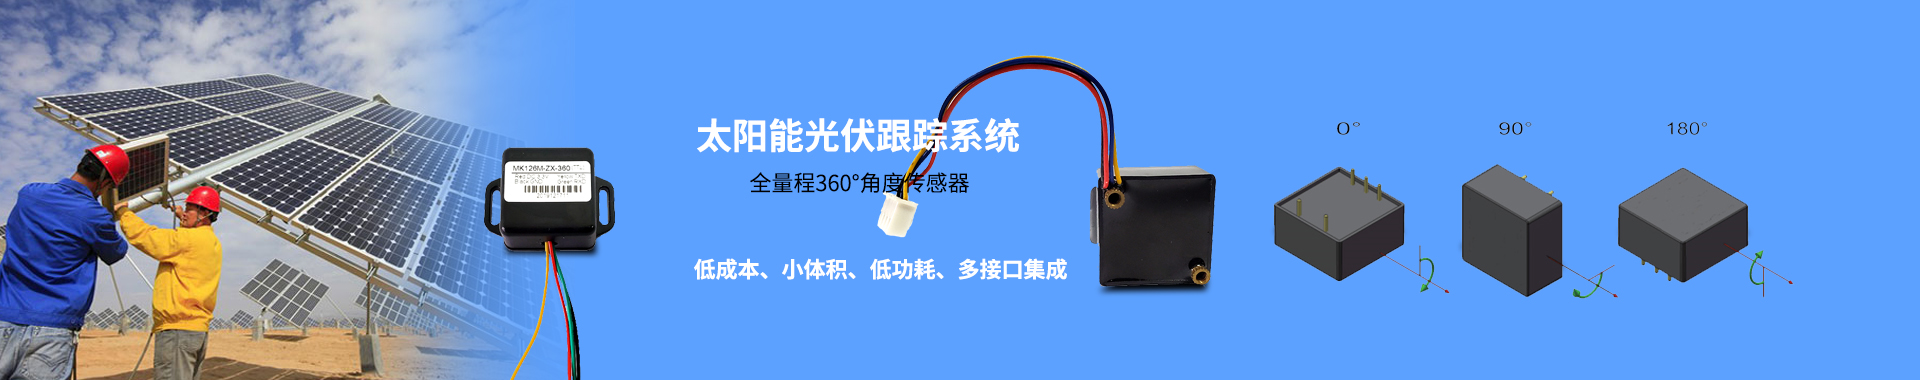 MK126M倾角传感器光伏追踪-3499cc拉斯维加斯(中国)有限公司